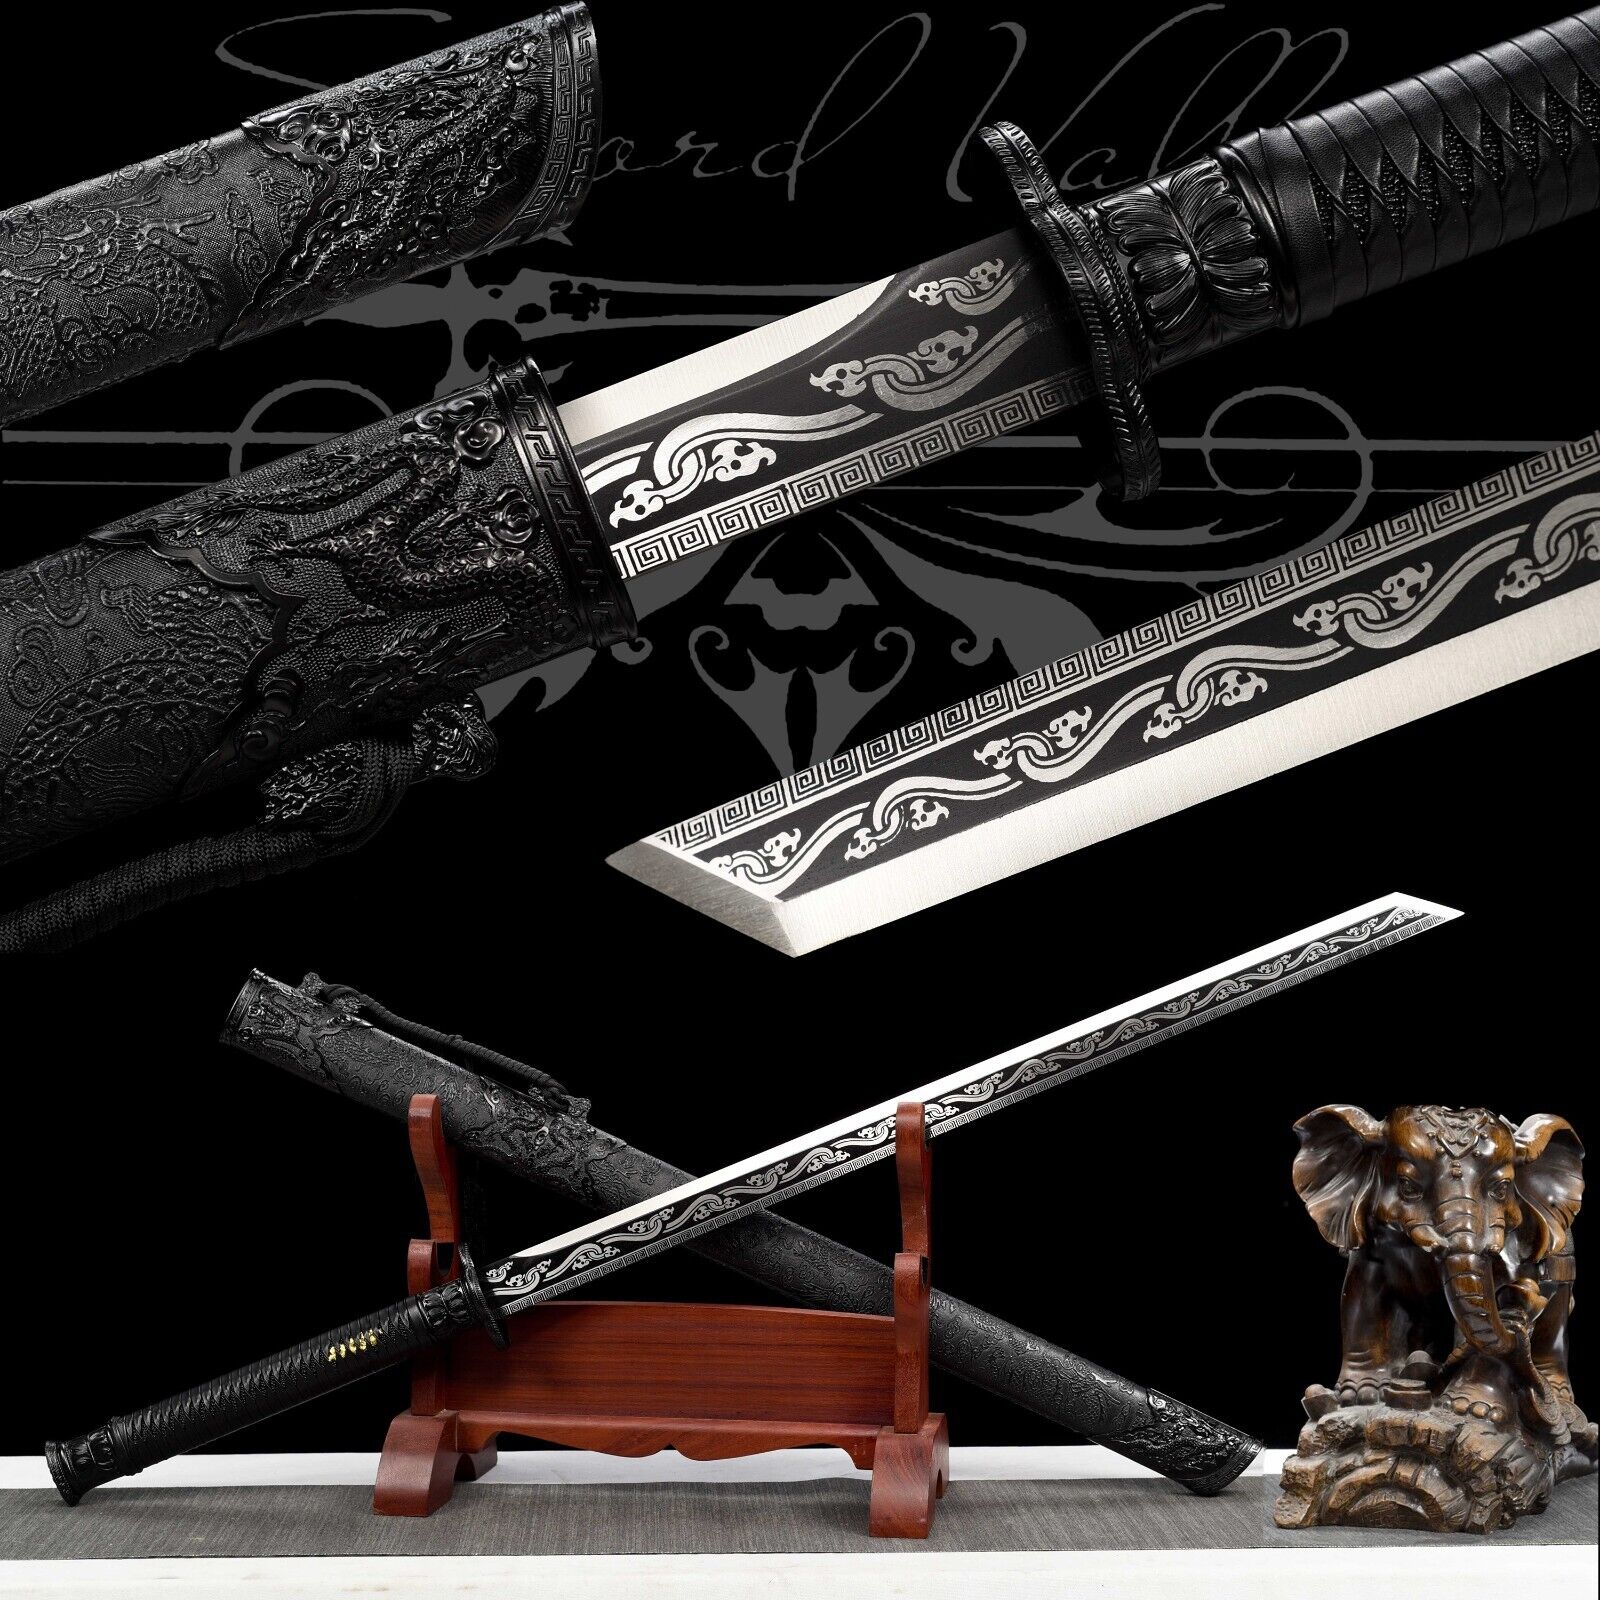 Handmade Katana/High Manganese Steel/Black/Collectible Sword/Battle Ready